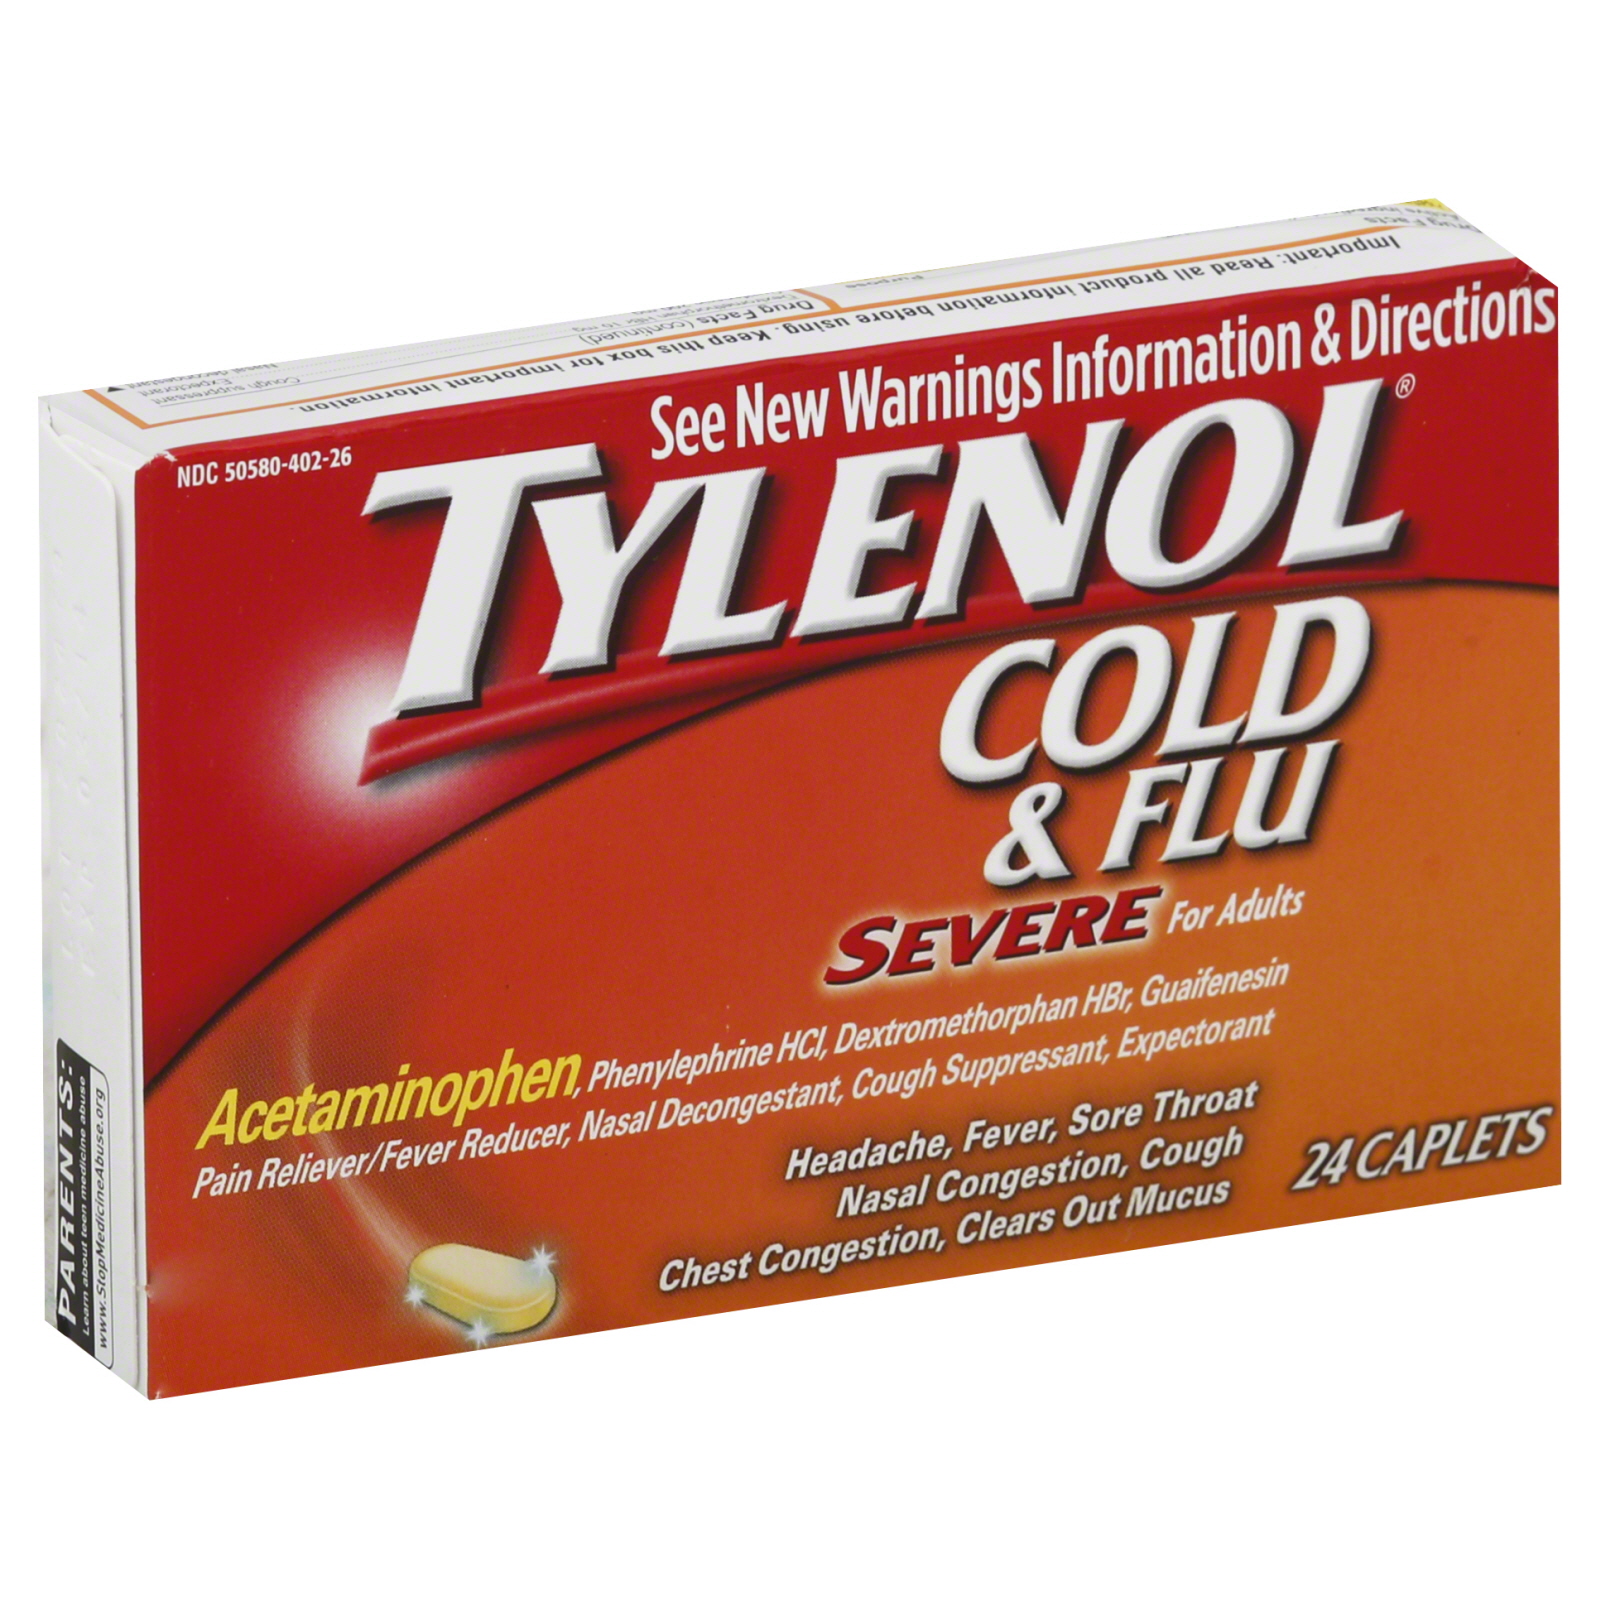 Cold & Flu Severe Caplets